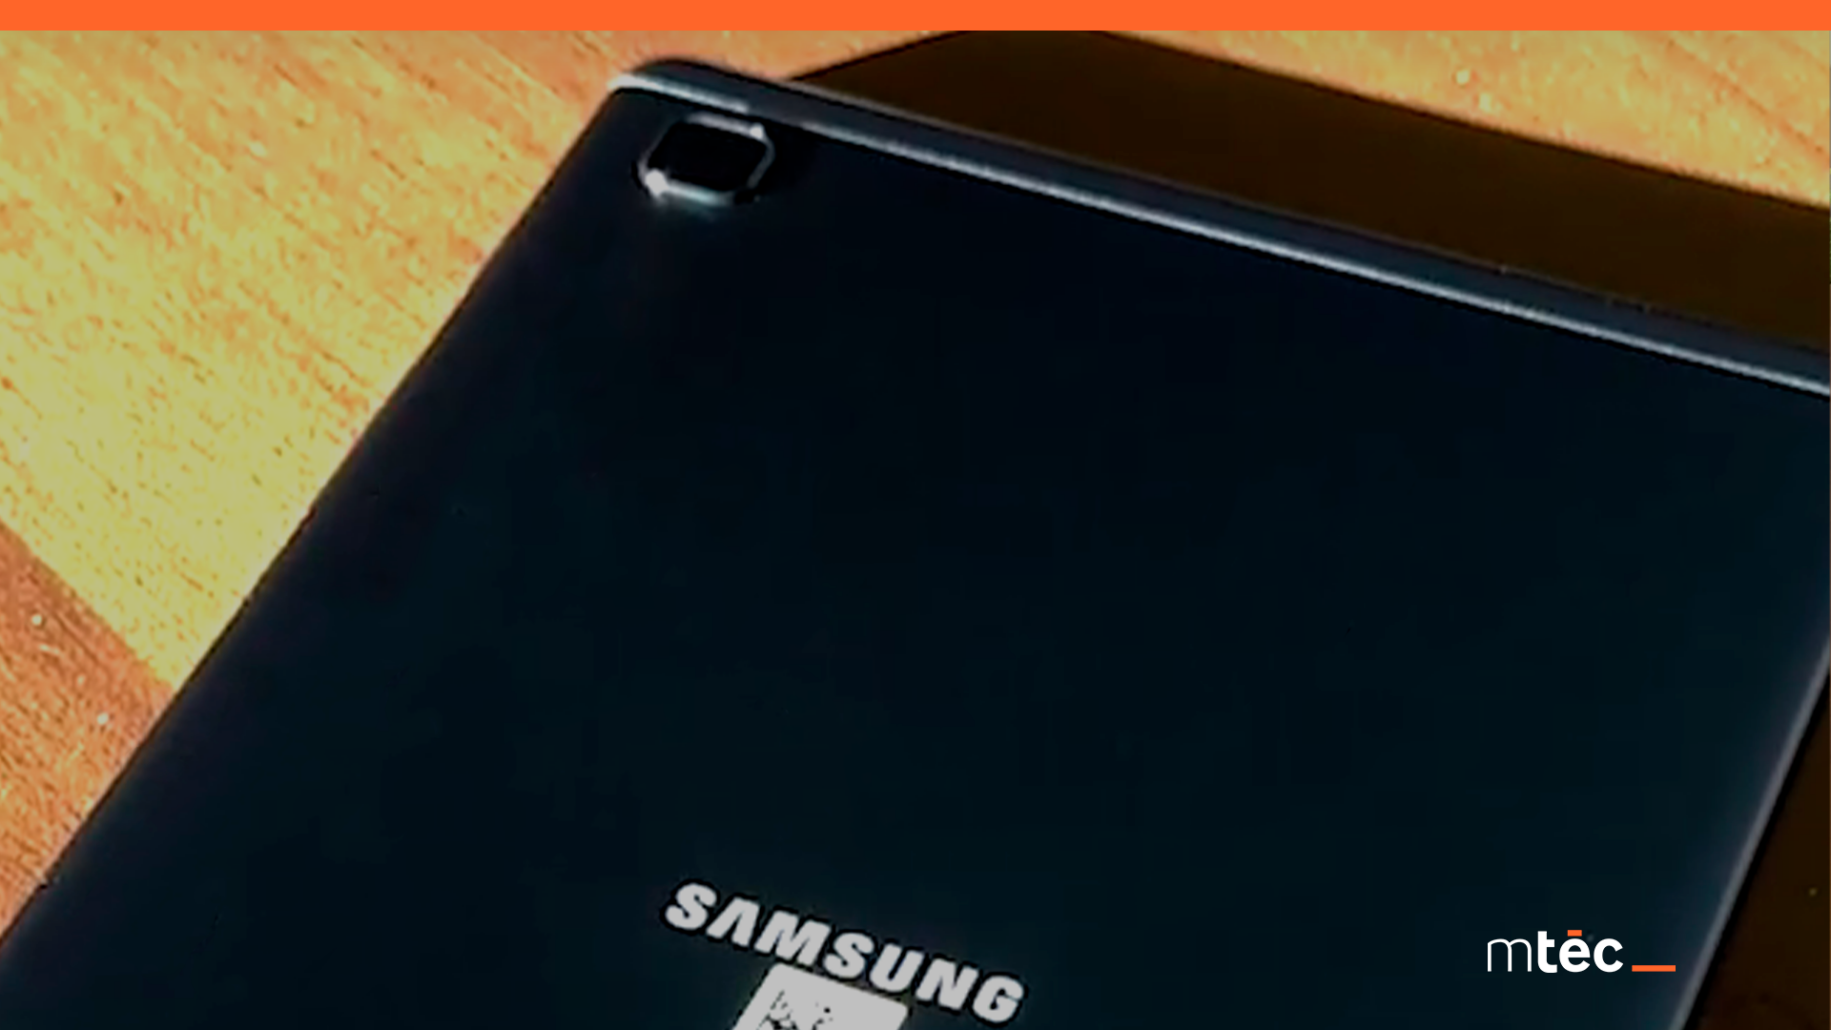 Compacto e poderoso: conheça o Samsung Galaxy Tab A7 Lite - mtec